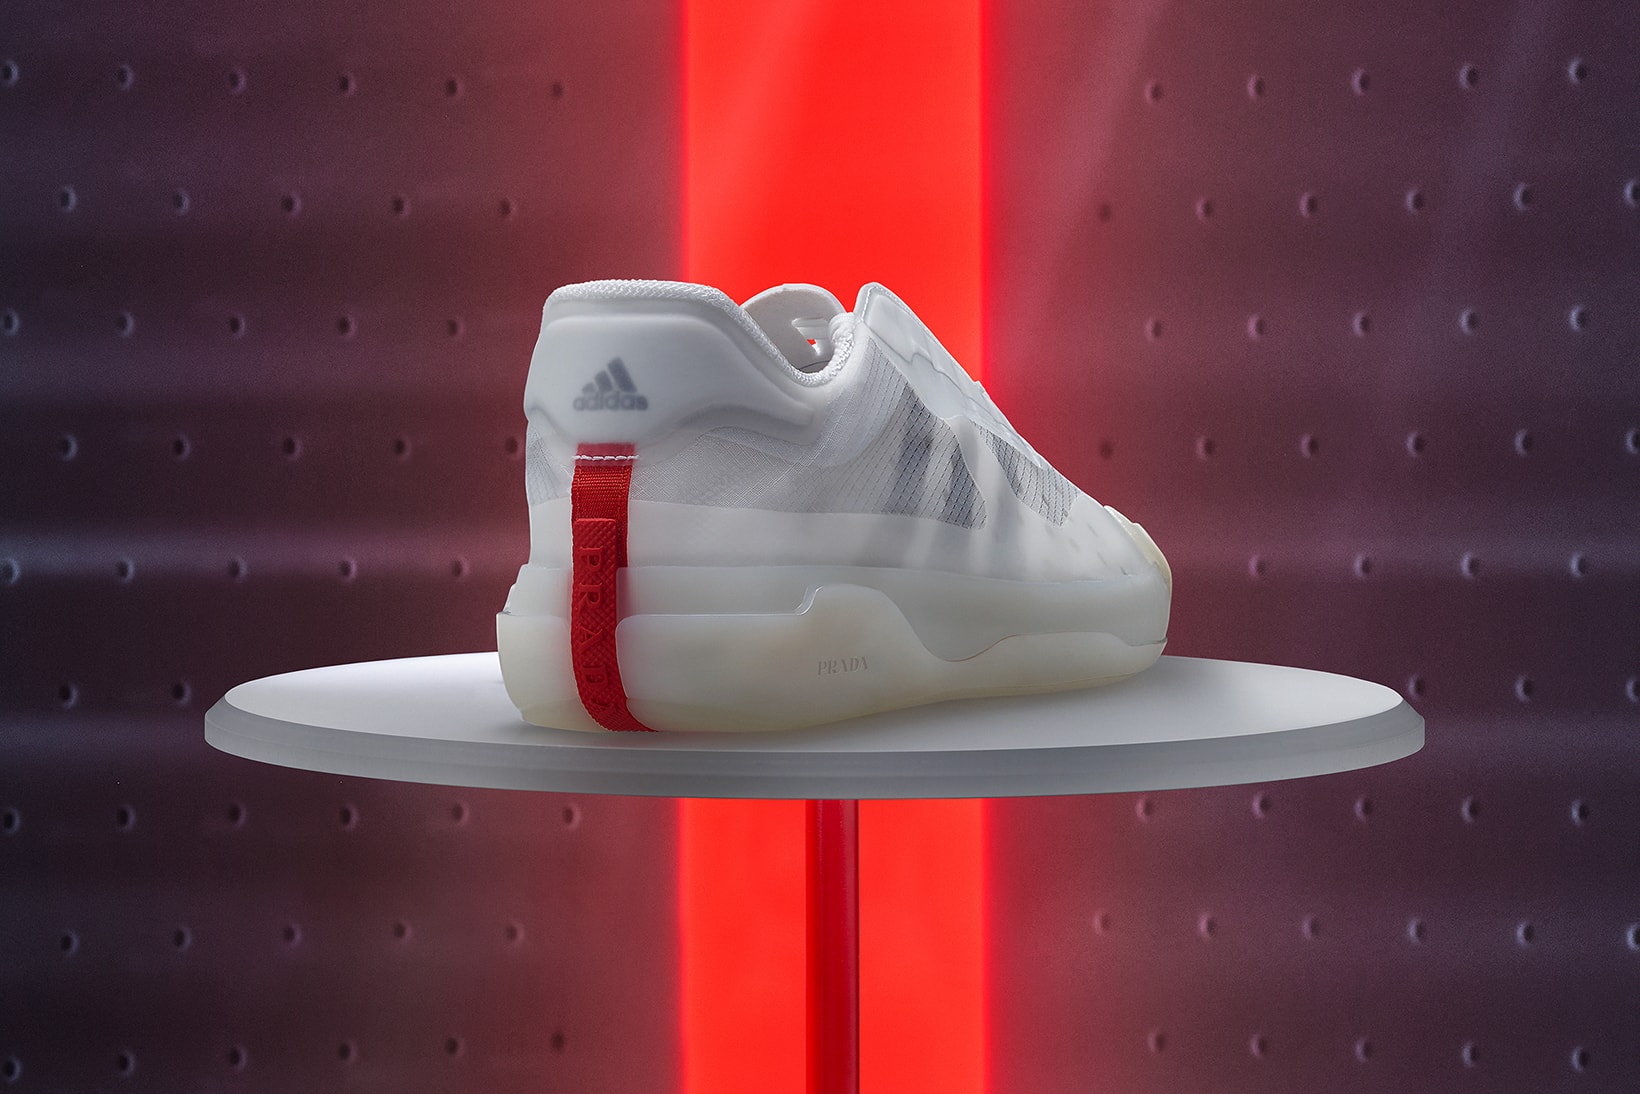 Prada x adidas Sneaker Collaboration Luna Rossa 21 White